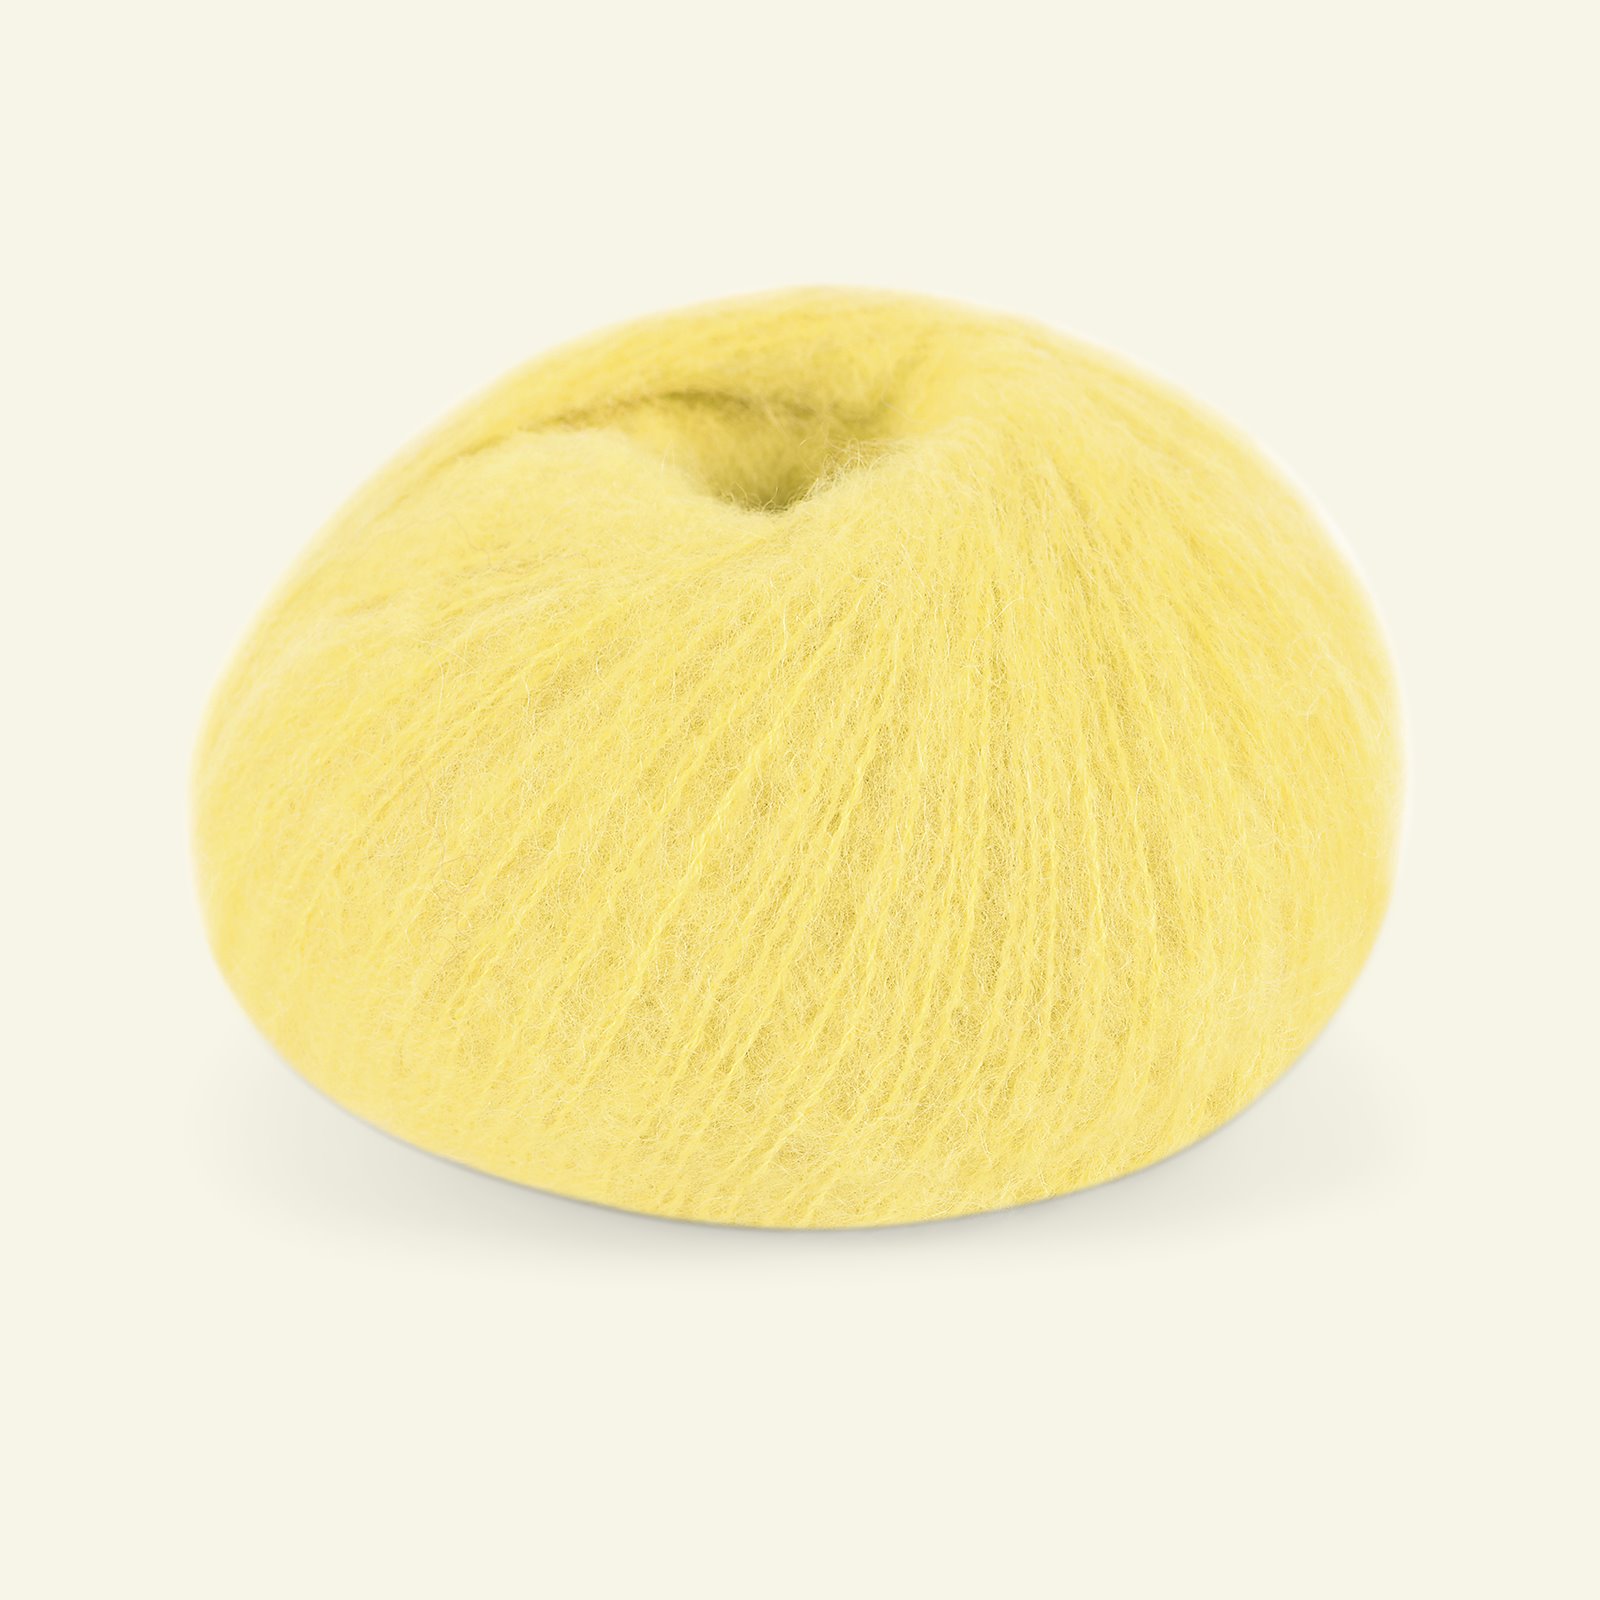 Du Store Alpakka, airy alpaca yarn "Faerytale", yellow (812) 90000619_pack_b